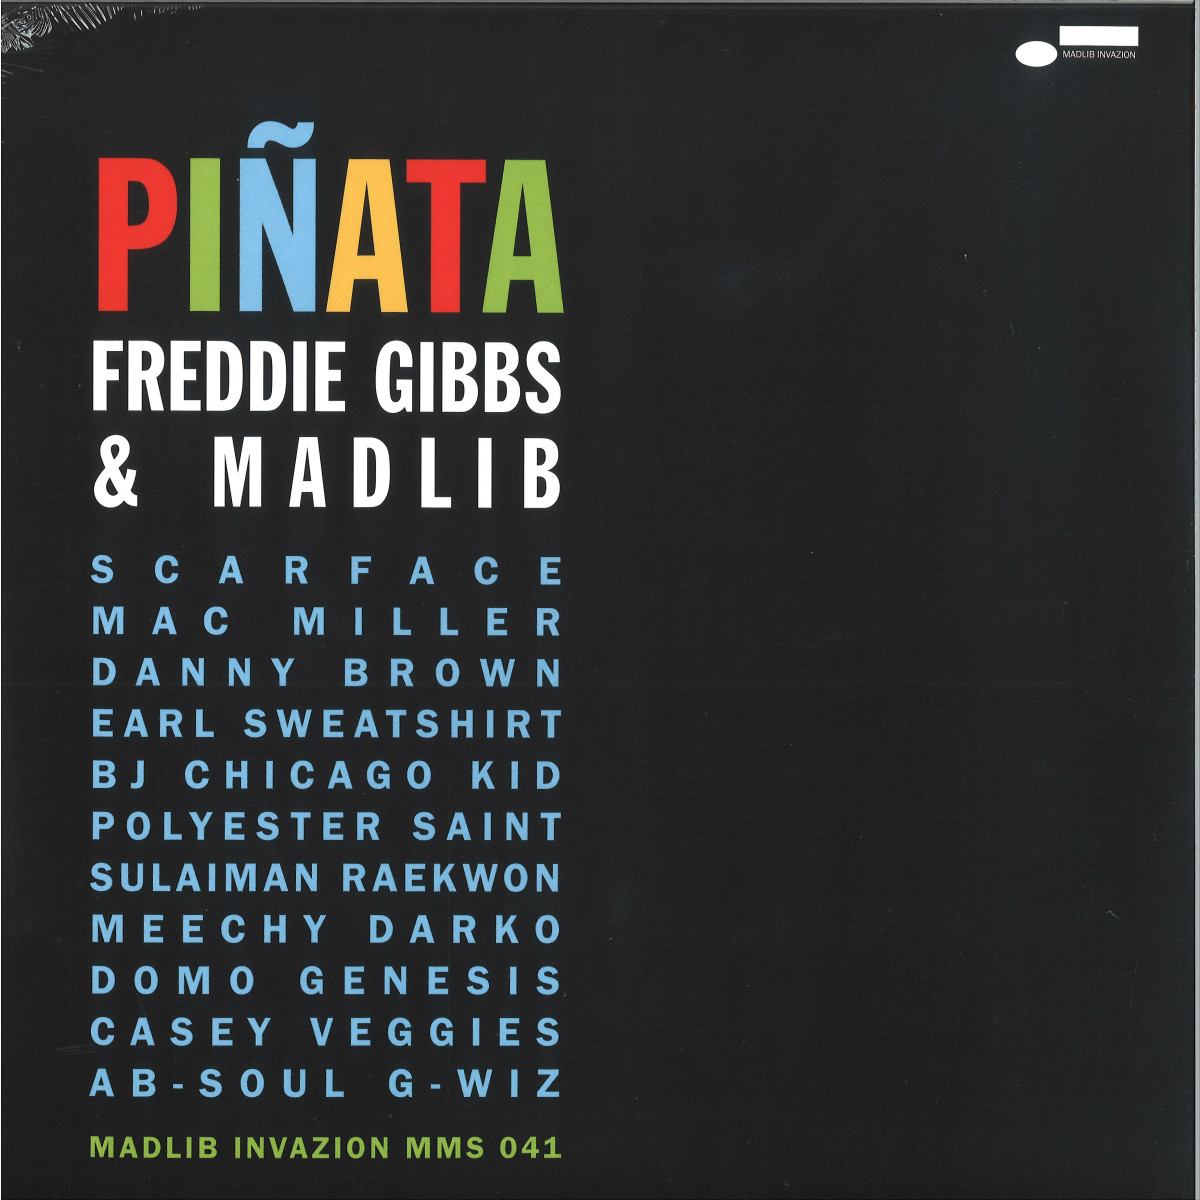 Freddie Gibbs & Madlib - Pinata: The 1964 Version LP / MADLIB INVAZION  MMS041RCLP - Vinyl